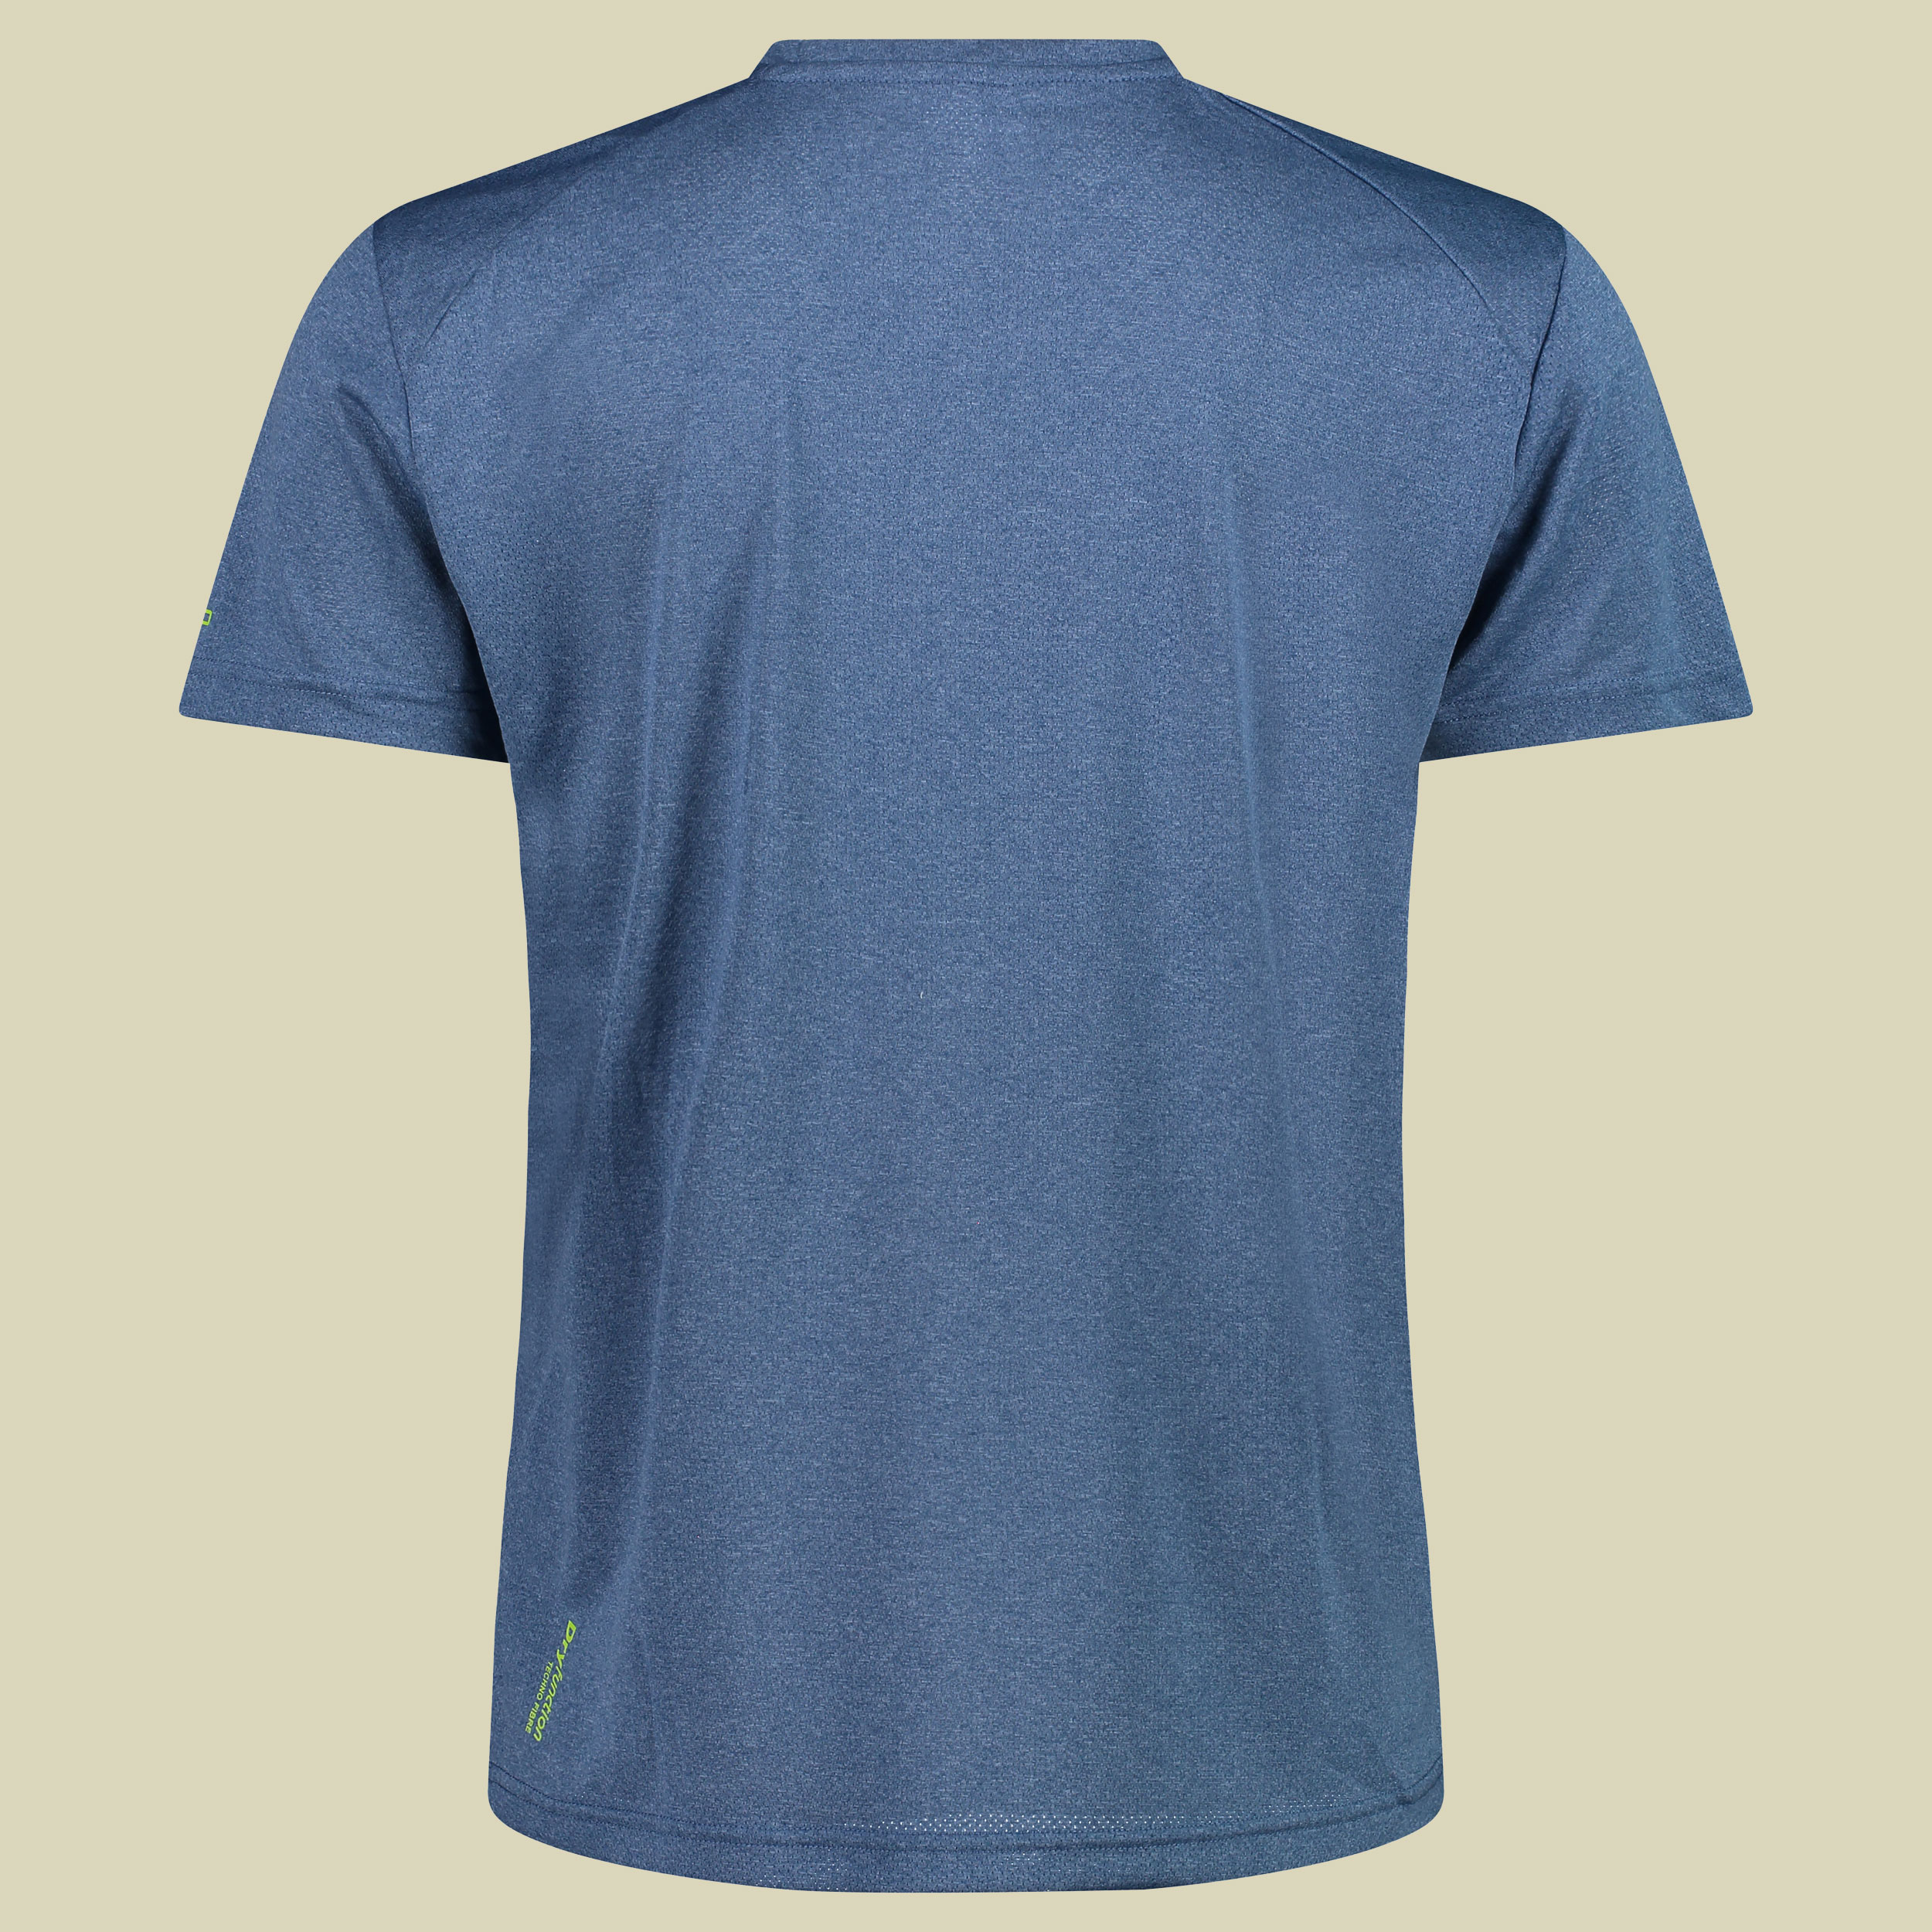 Man T-Shirt 31T5847 Größe 50 Farbe M879 dusty blue